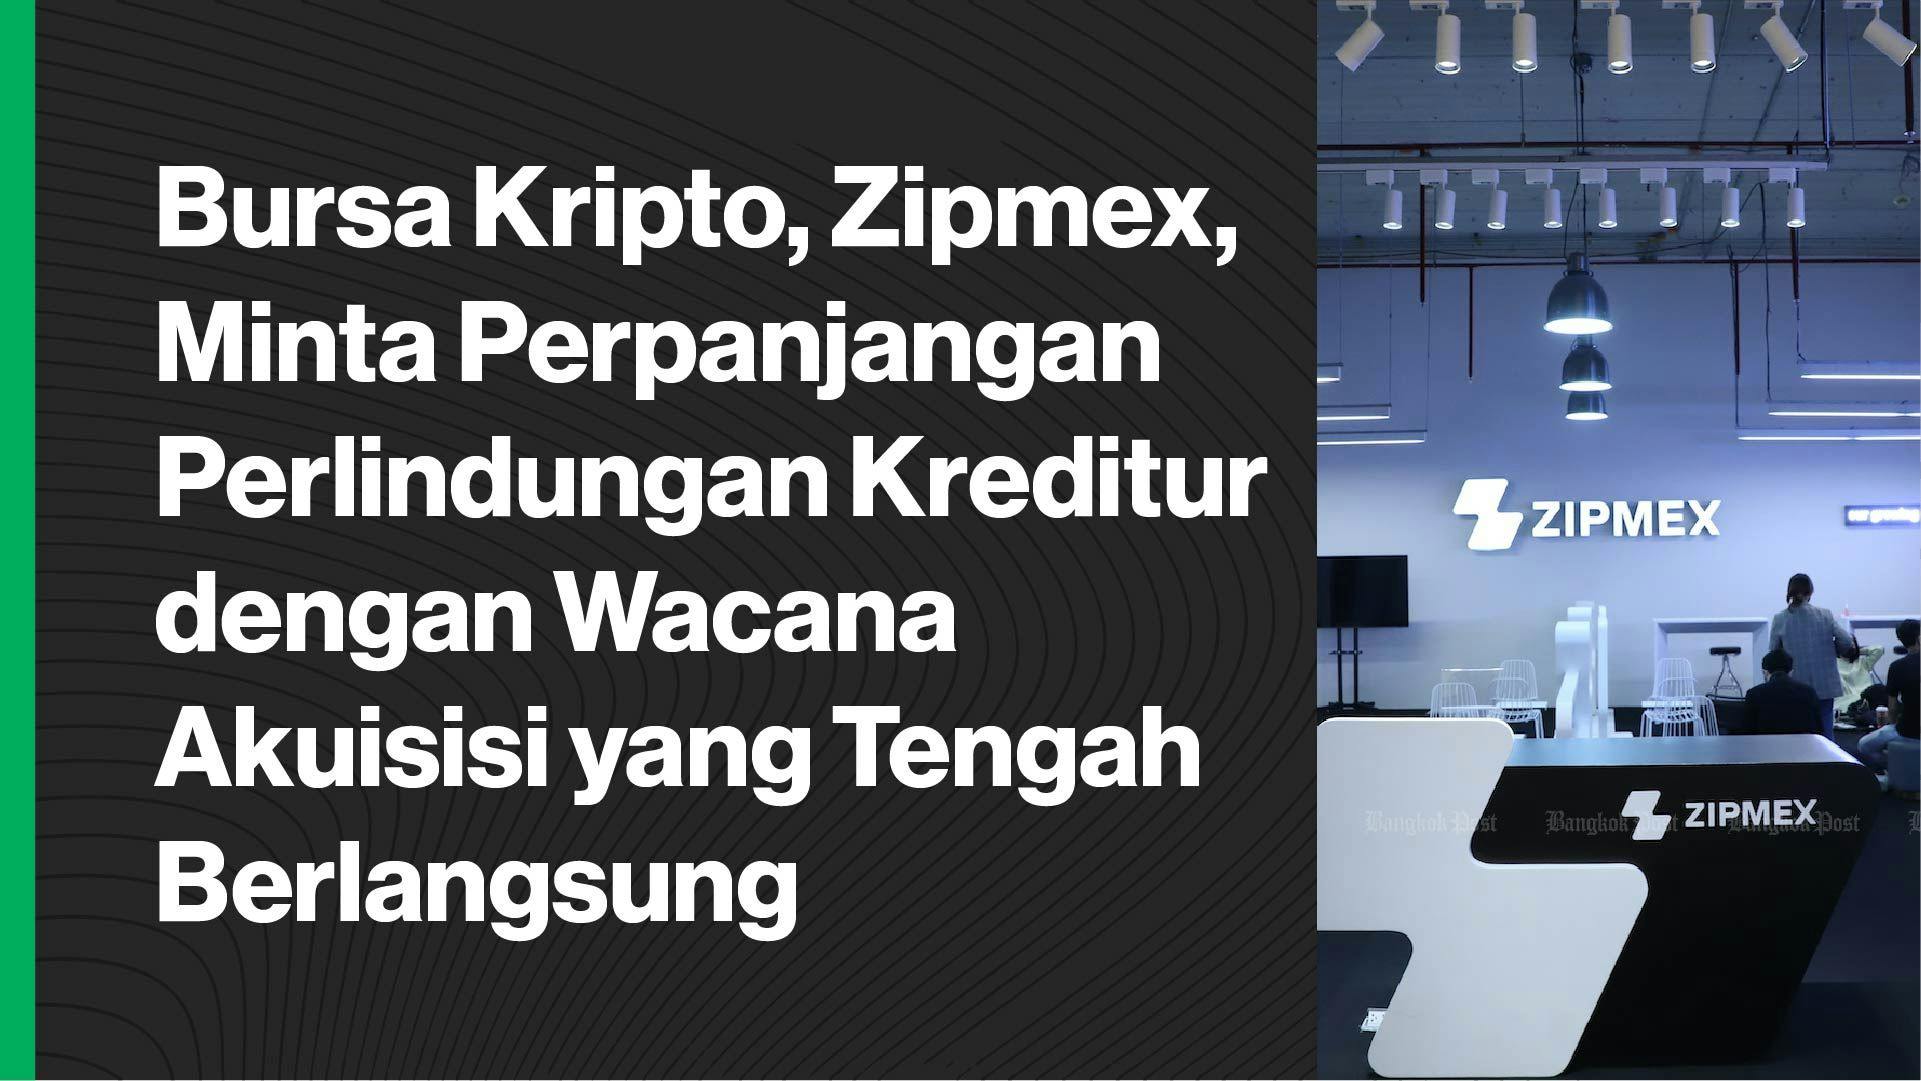  Zipmex mengajukan perpanjangan moratoriumnya di Singapura hingga April 2023. (Foto CDI)